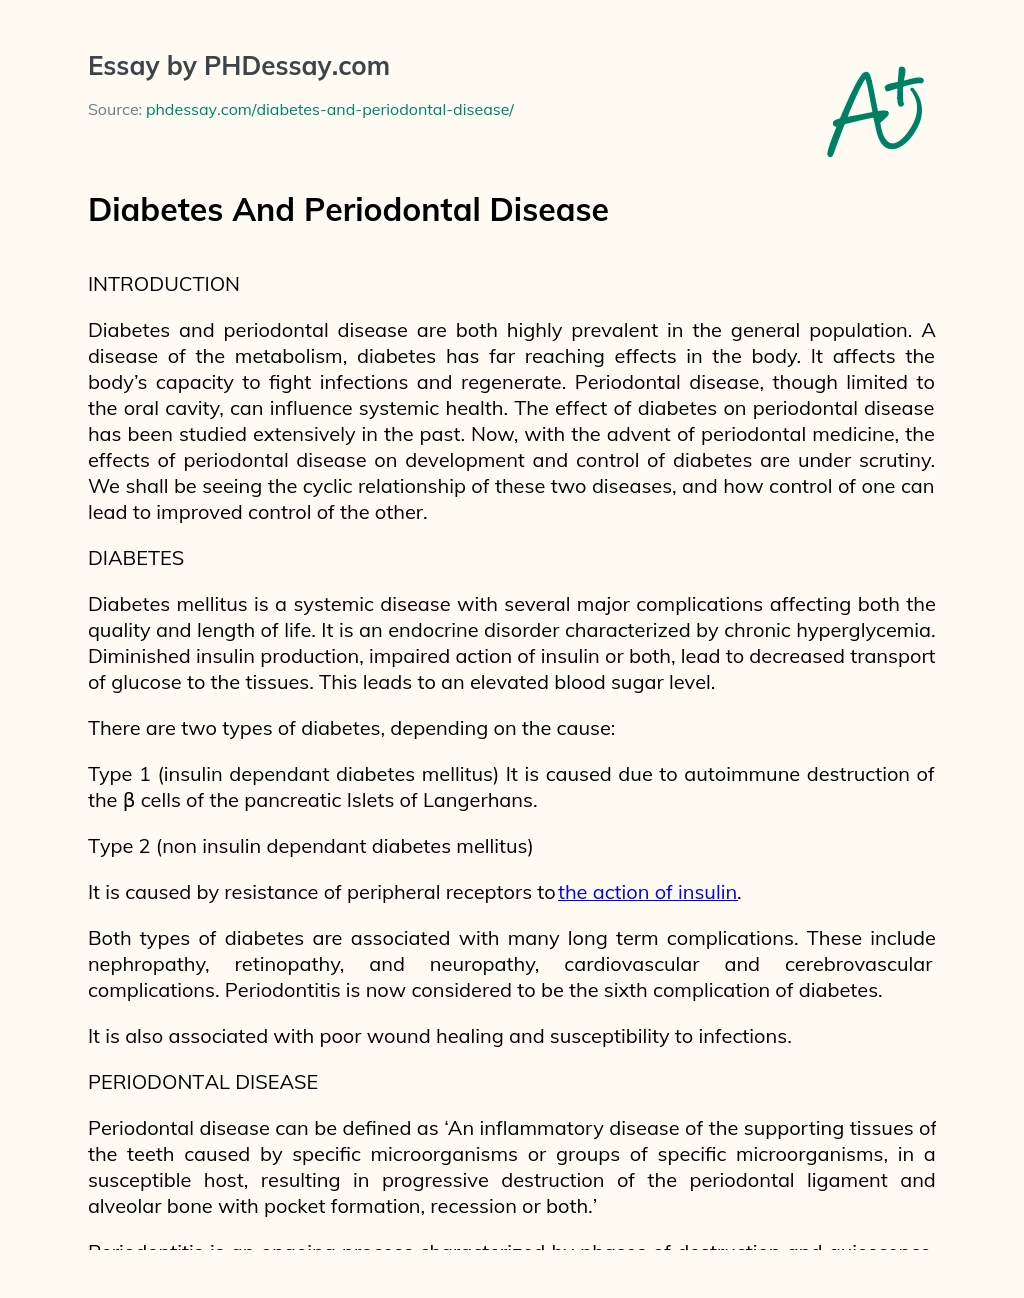 Diabetes And Periodontal Disease essay